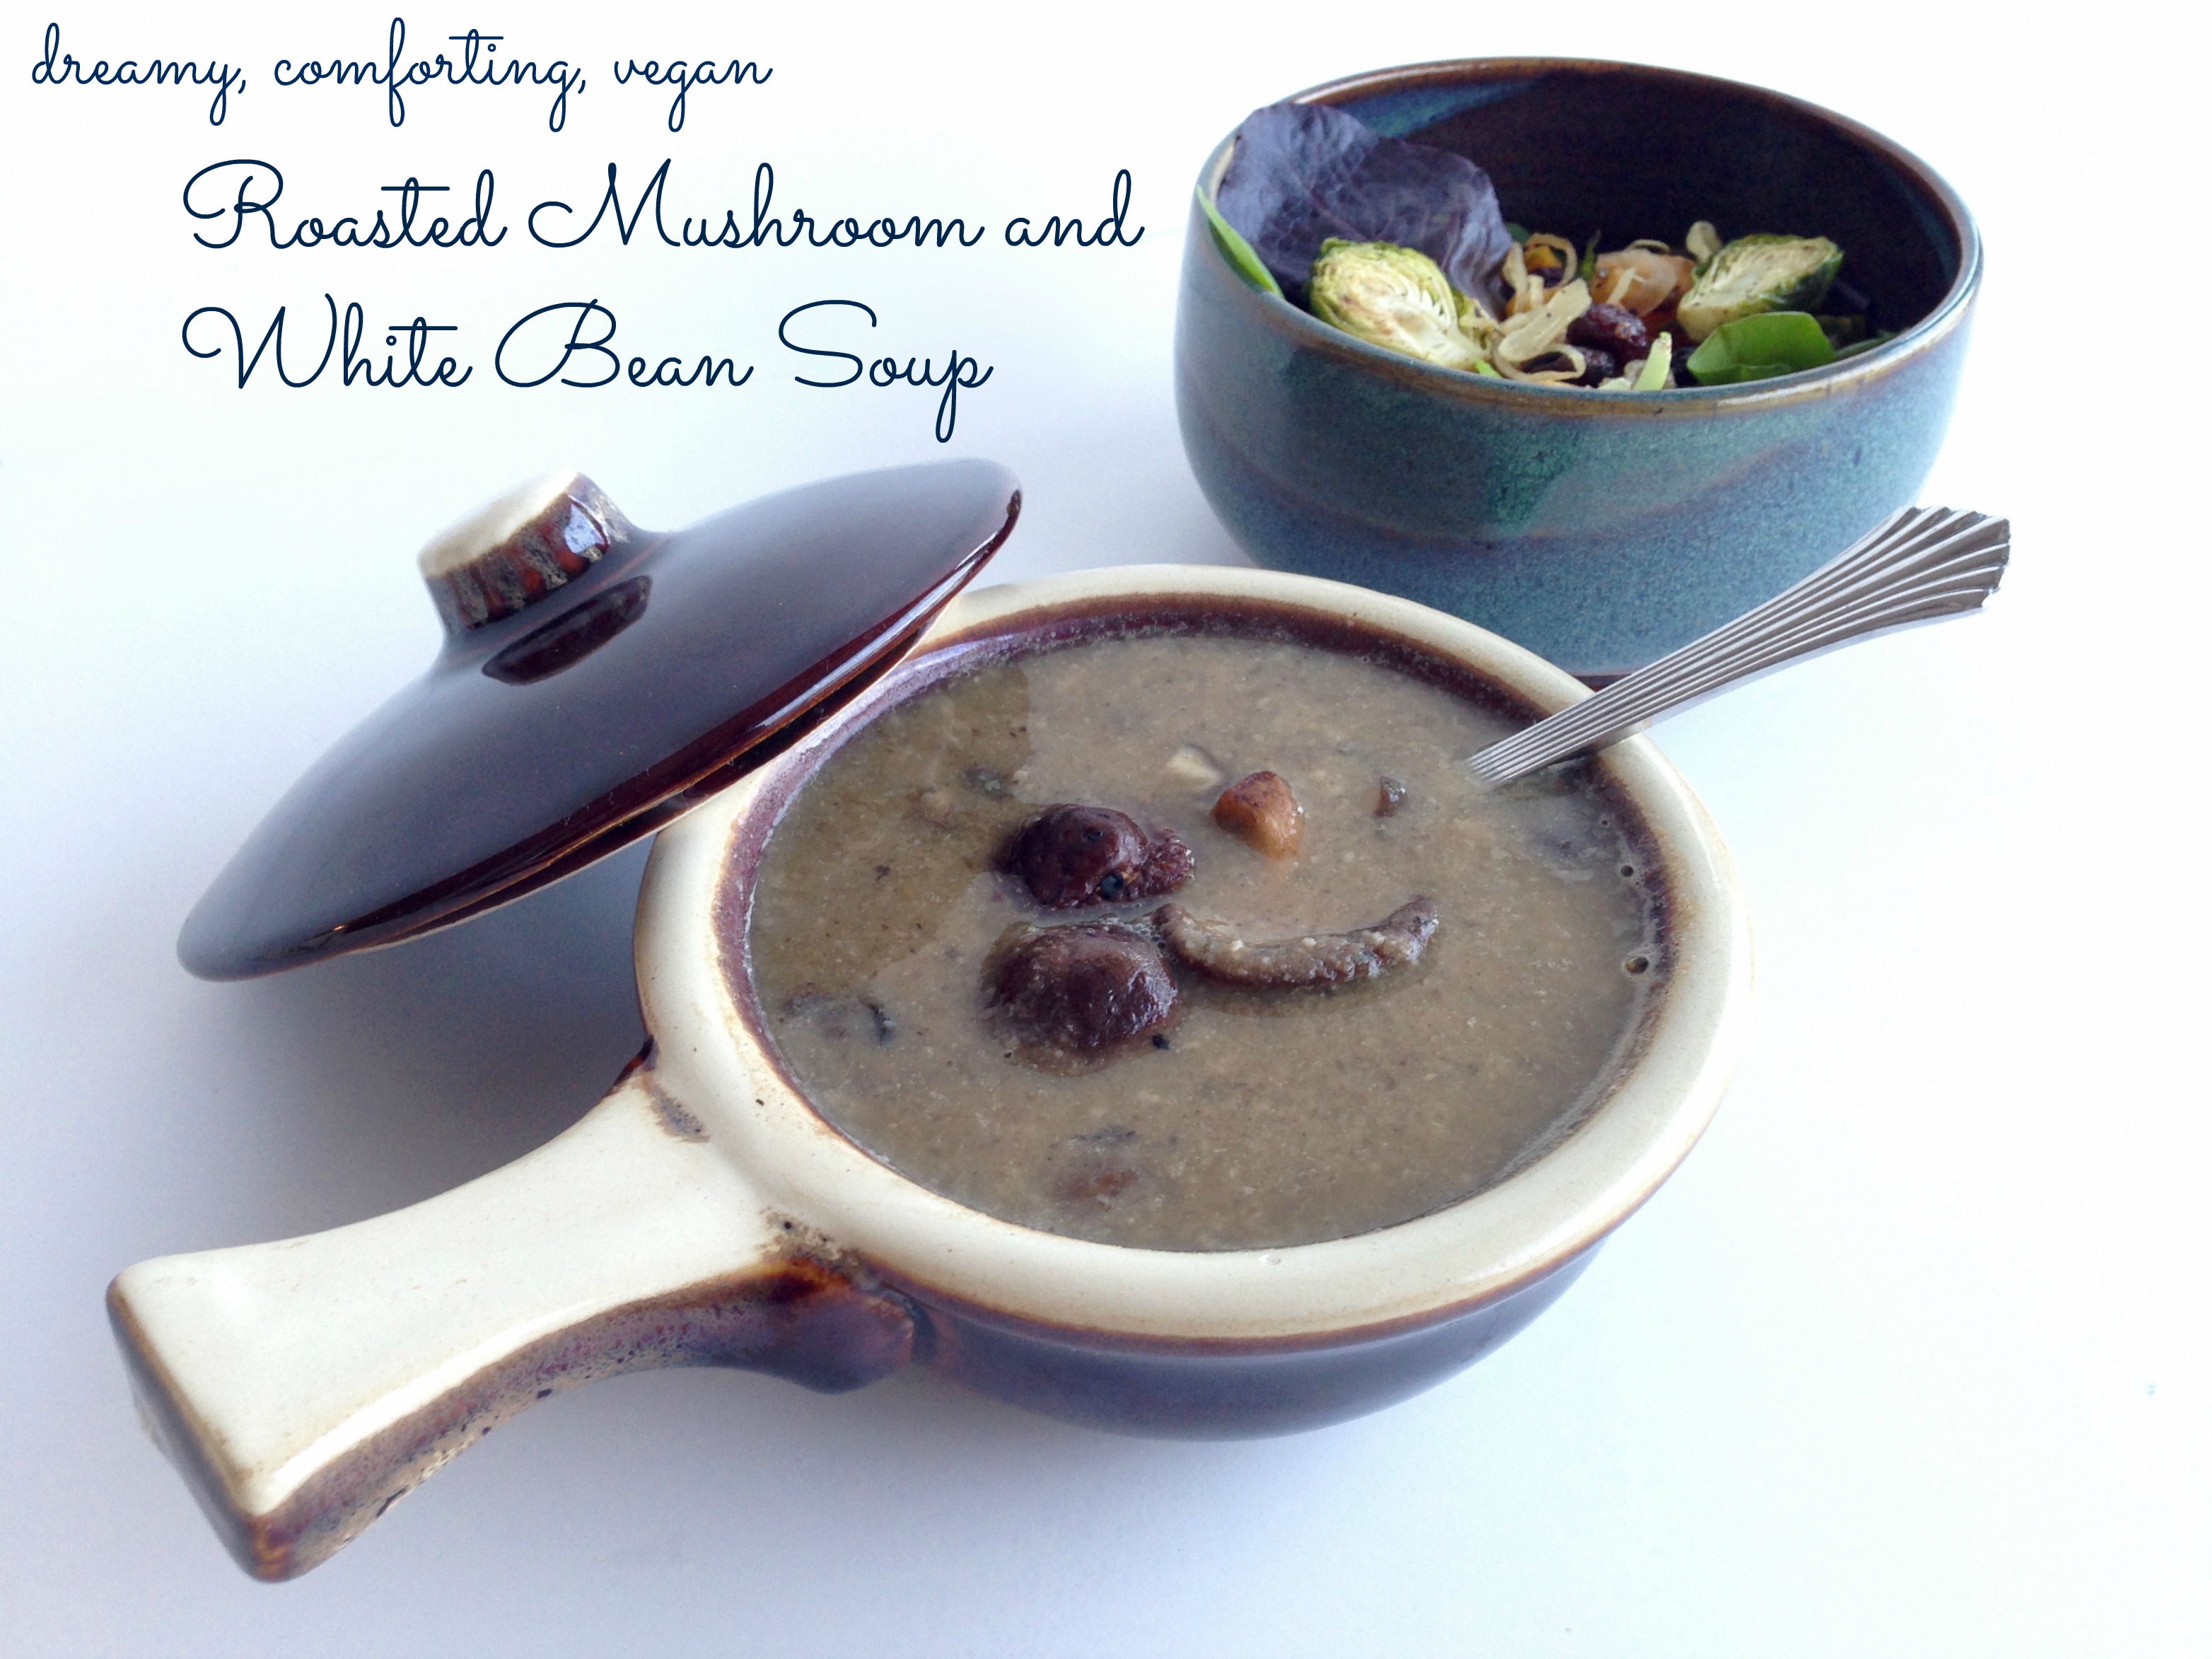 Vegan and Gluten free roasted mushroom and white bean soup with truffle oil shiitake and portobello mushrooms